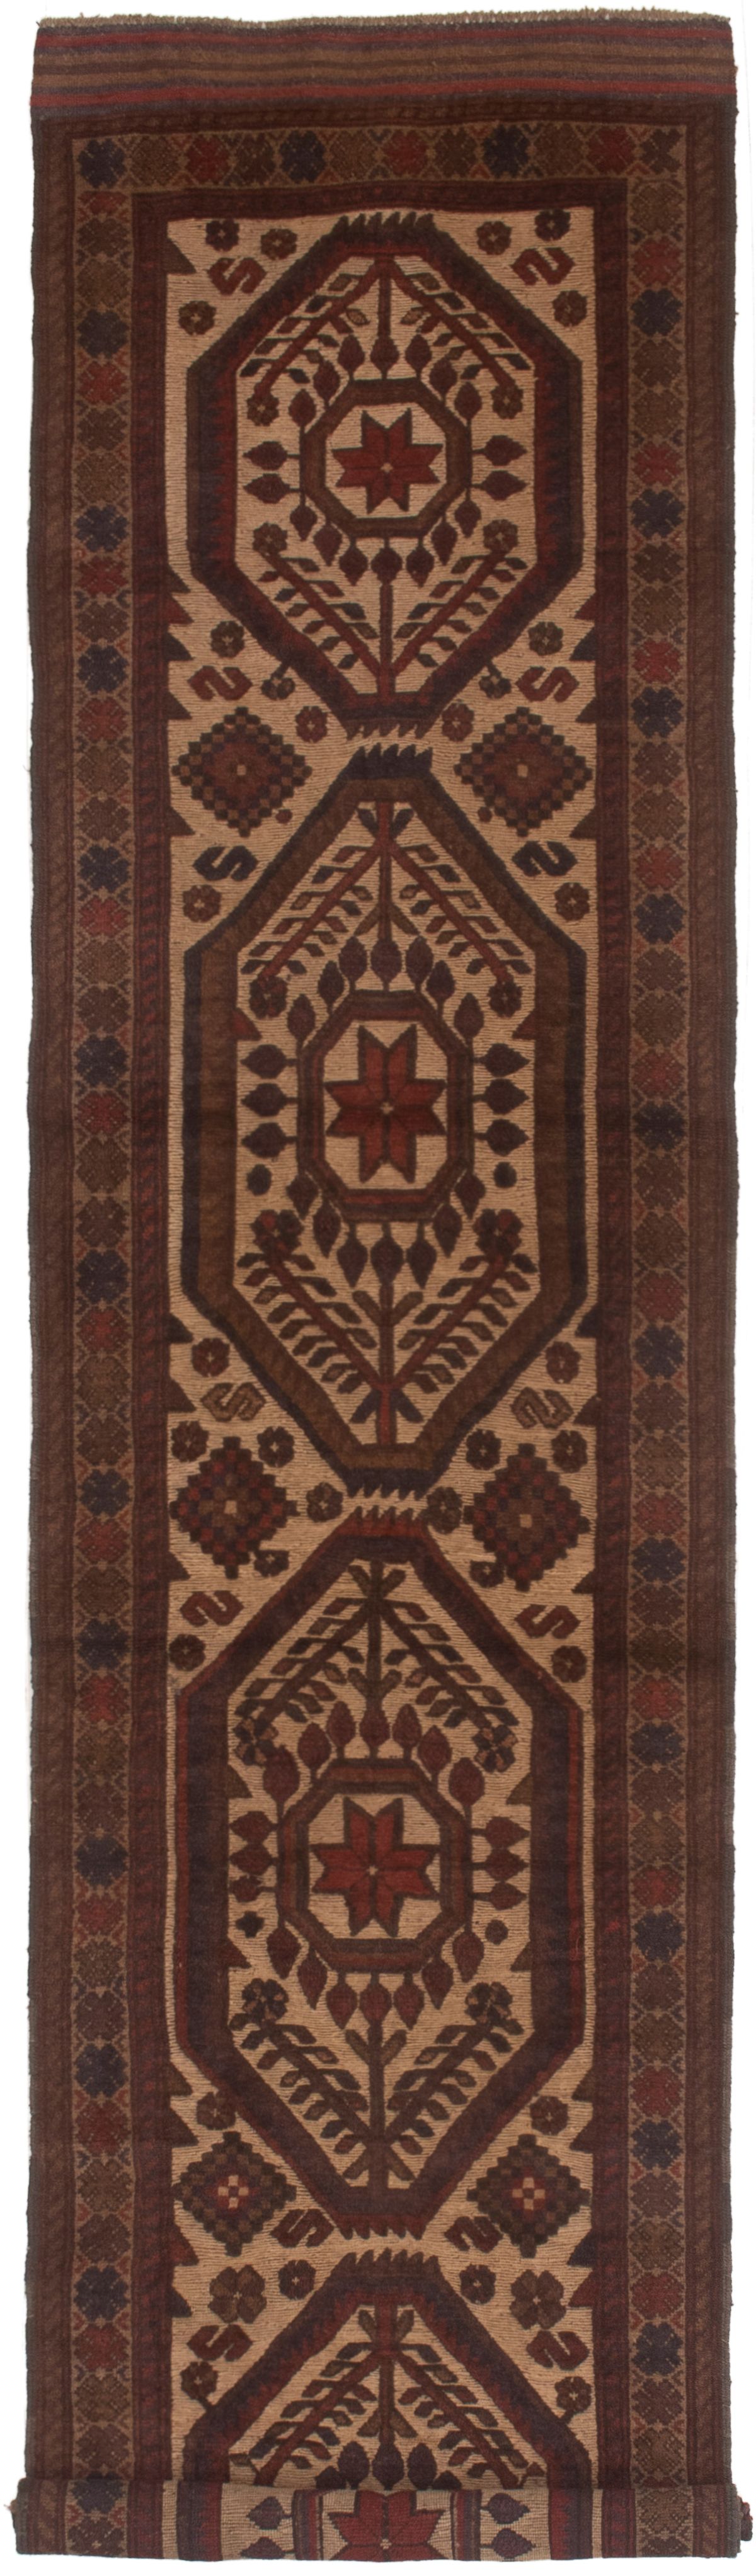 Hand-knotted Tajik Caucasian Cream Wool Rug 2'7" x 11'11" Size: 2'7" x 11'11"  